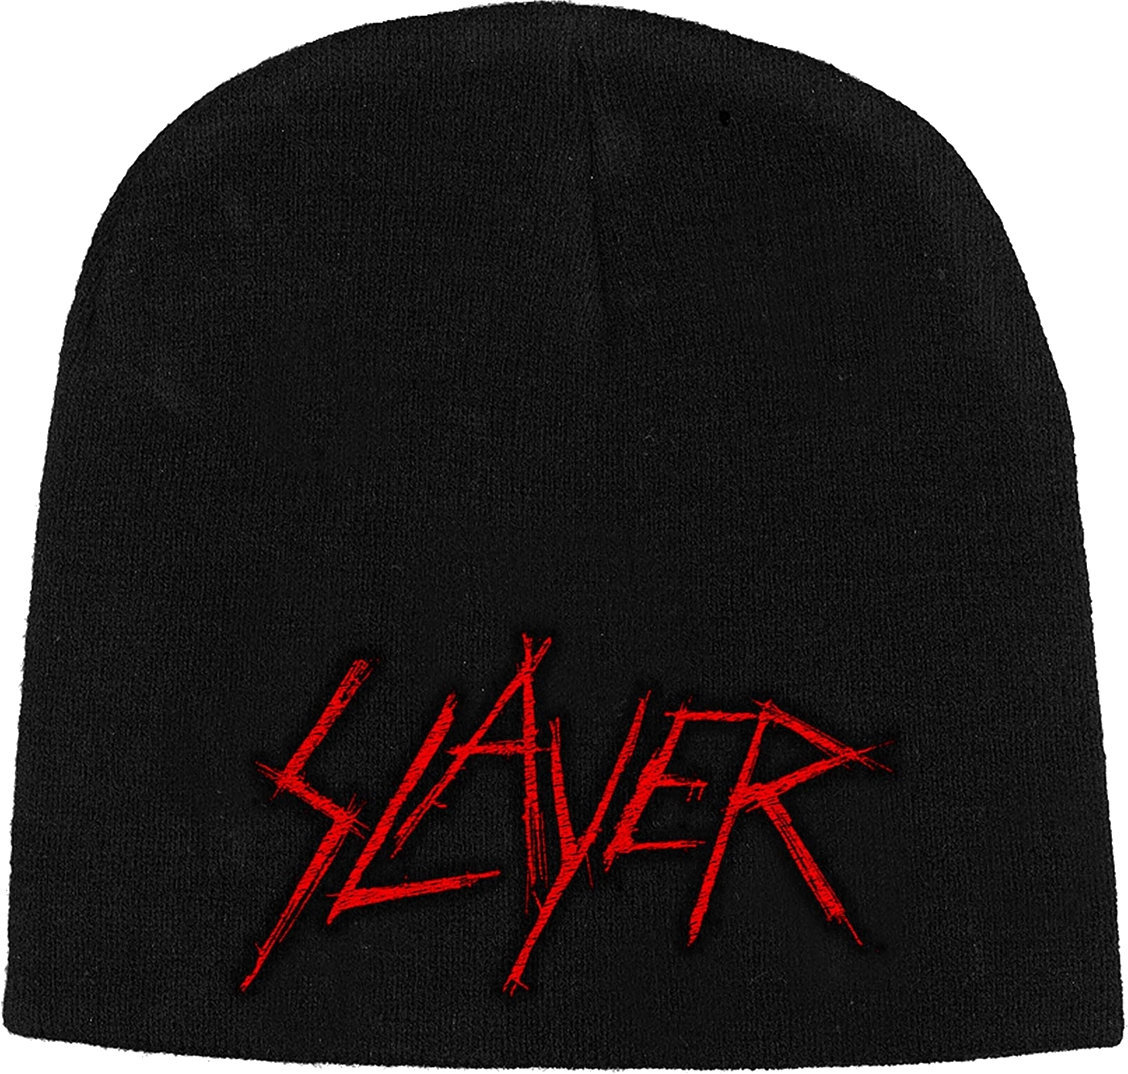 шапка Slayer шапка Logo Black